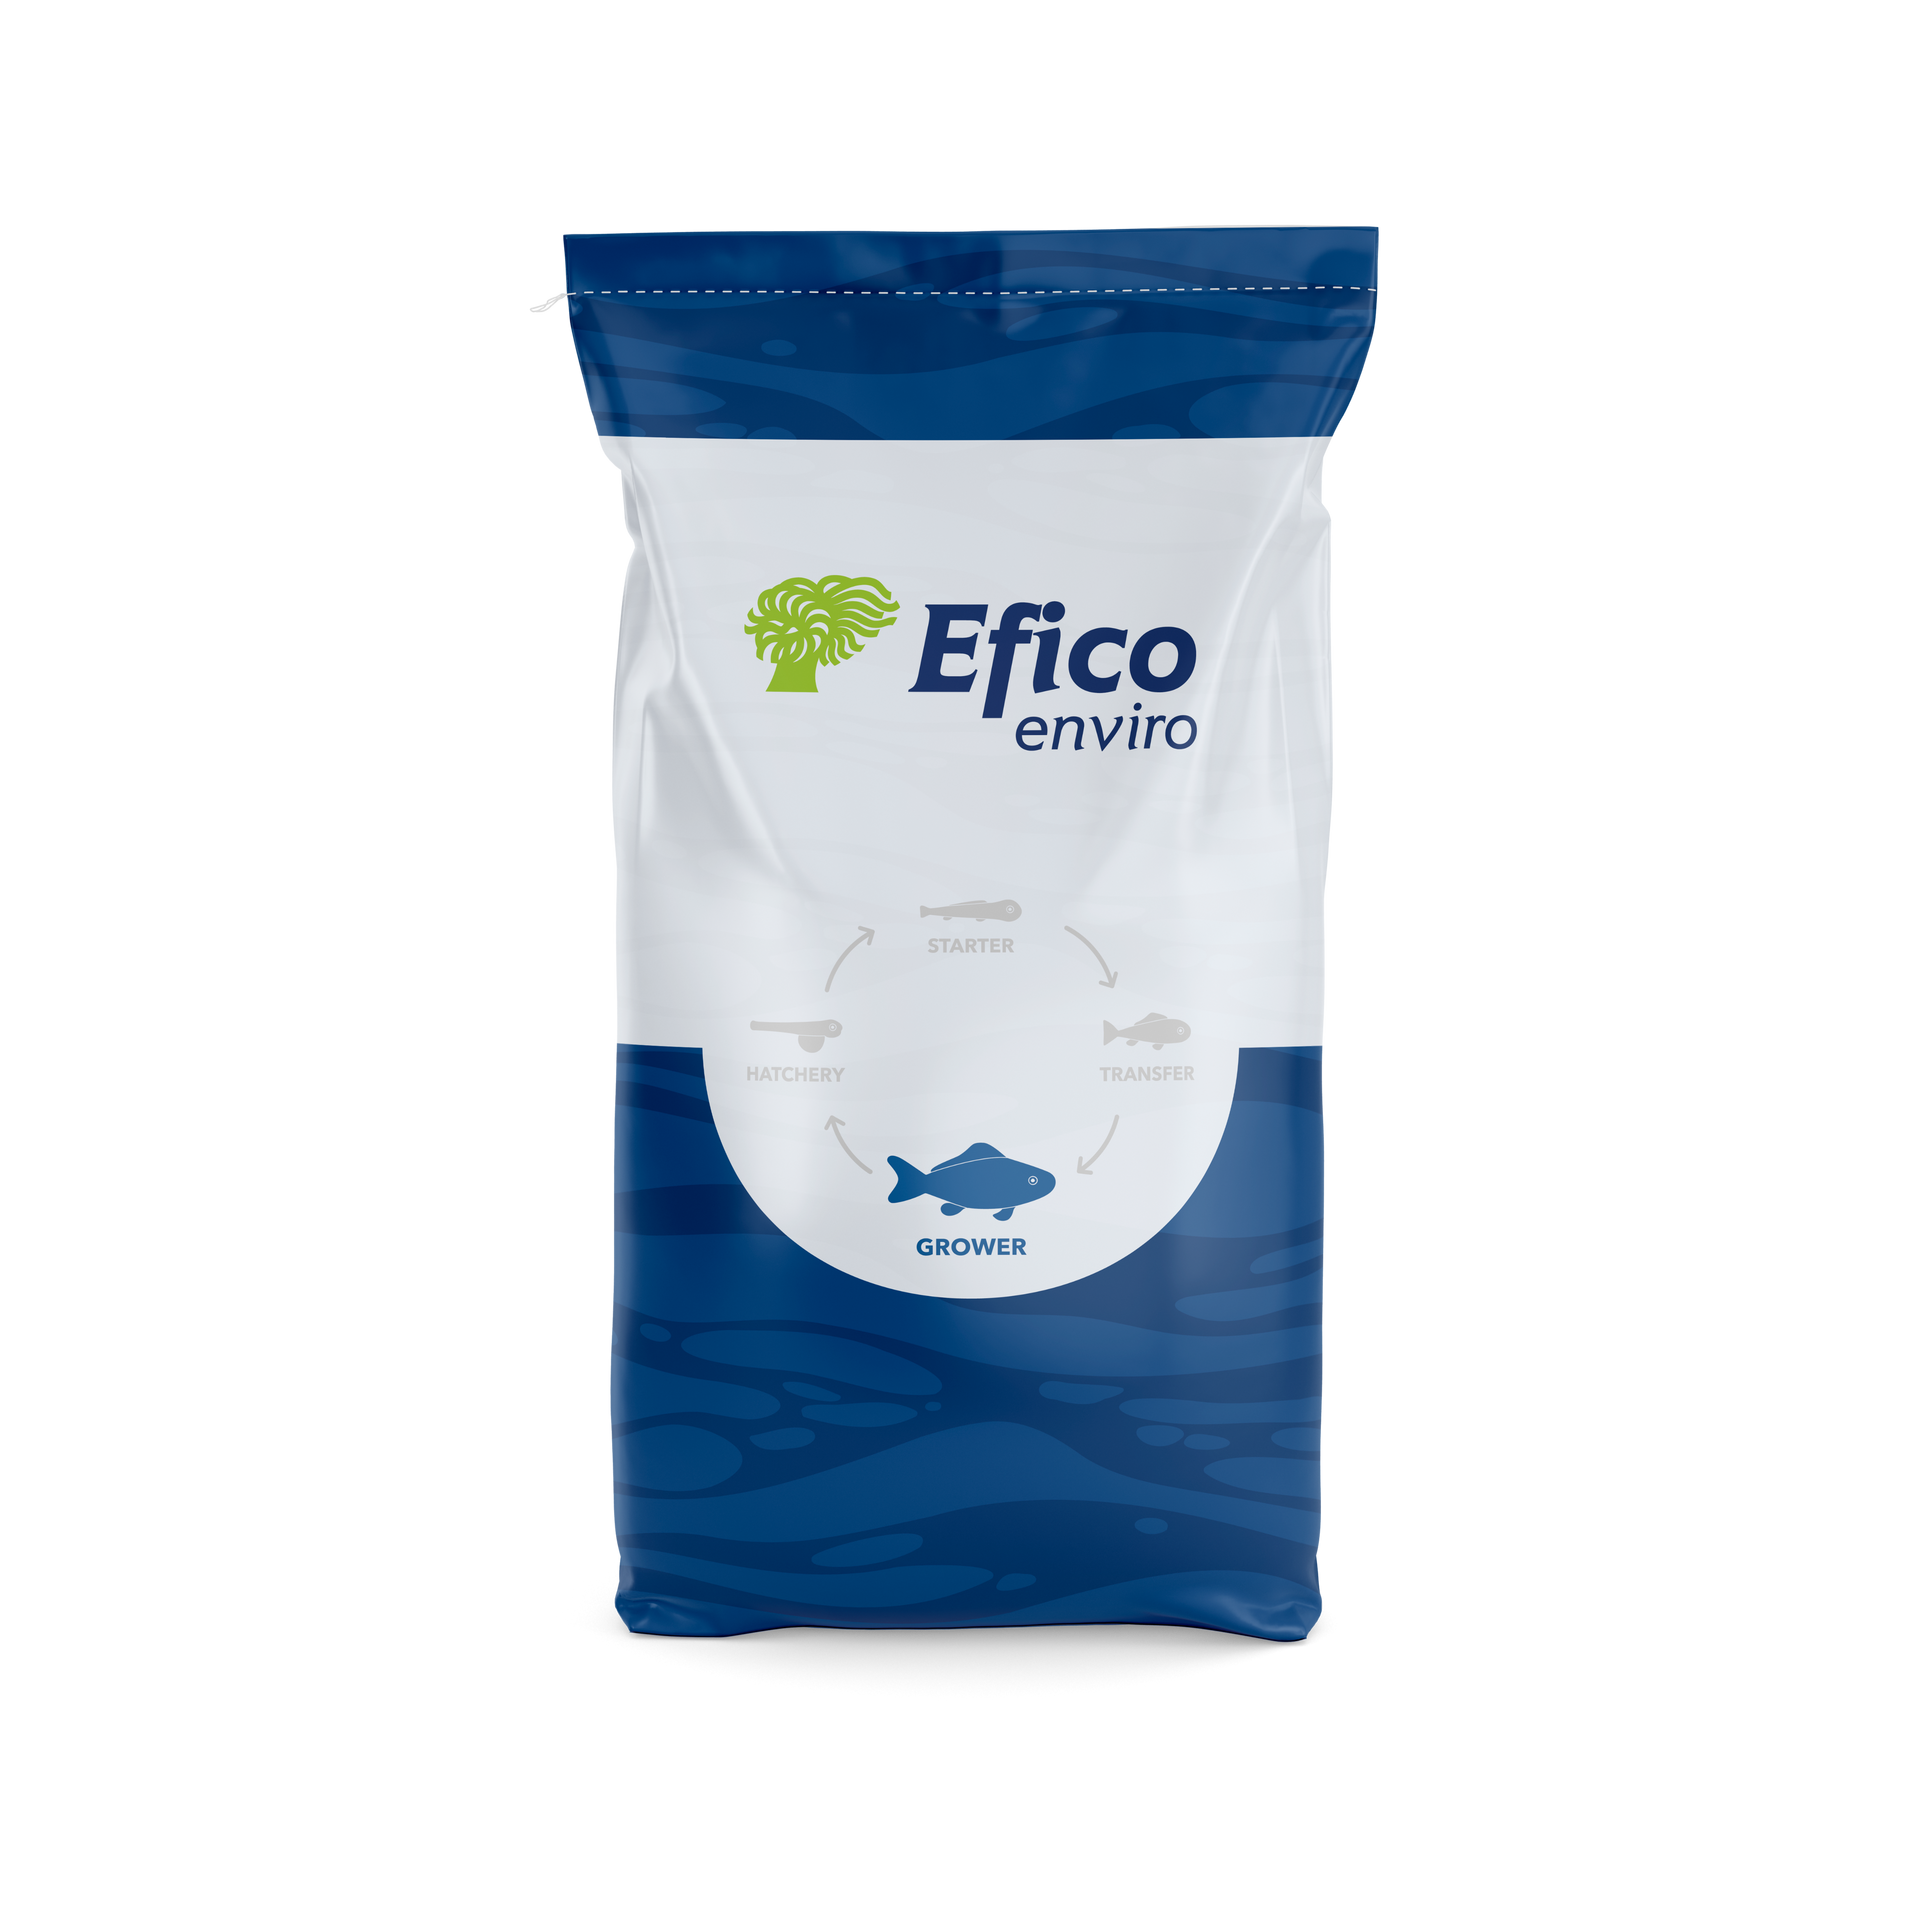 Top performance salmon grower feed Efico Enviro from BioMar